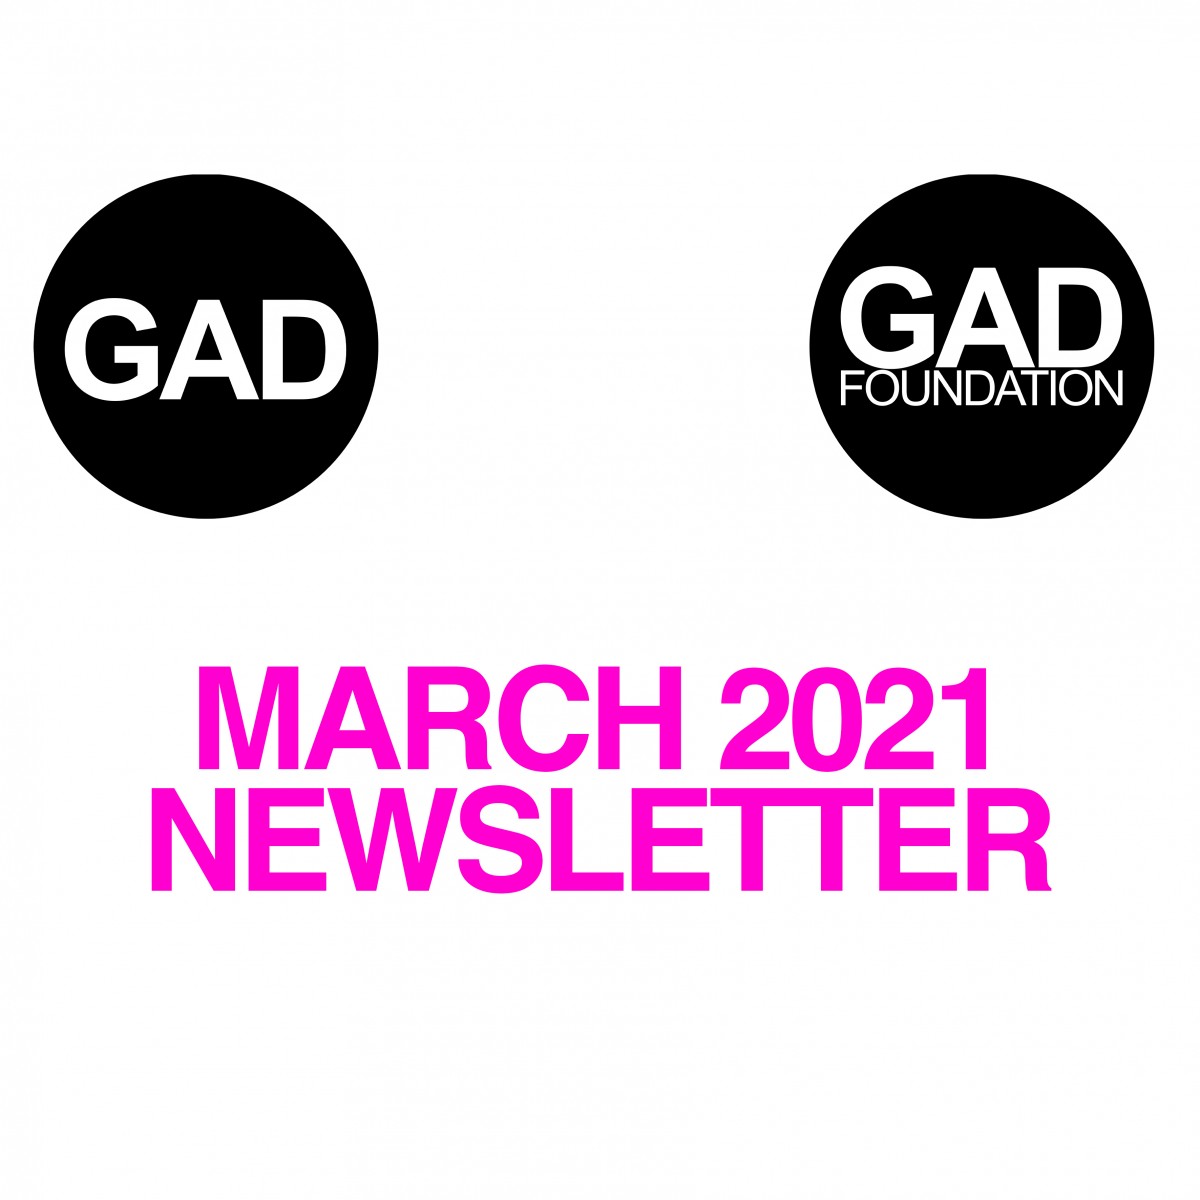 March 2021 Newsletter